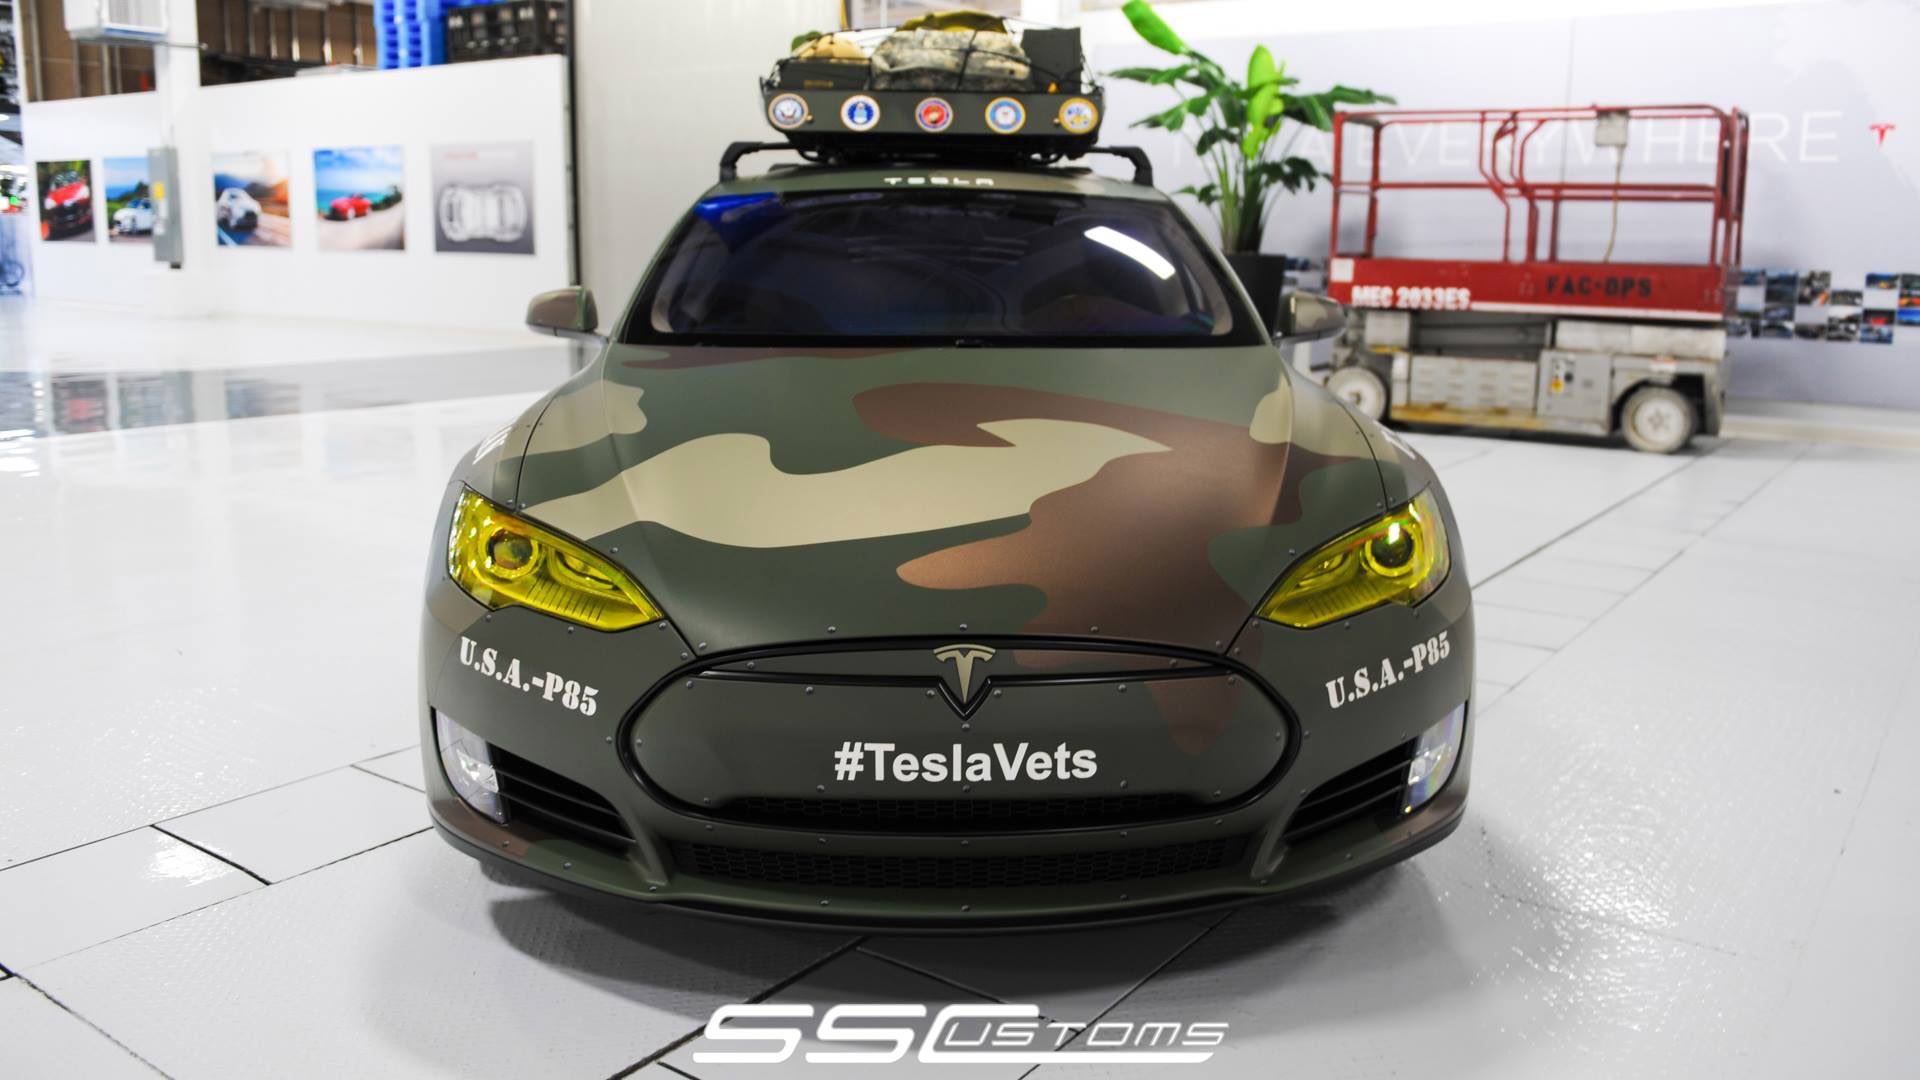 SS Customs Tesla Model S TeslaVets Project